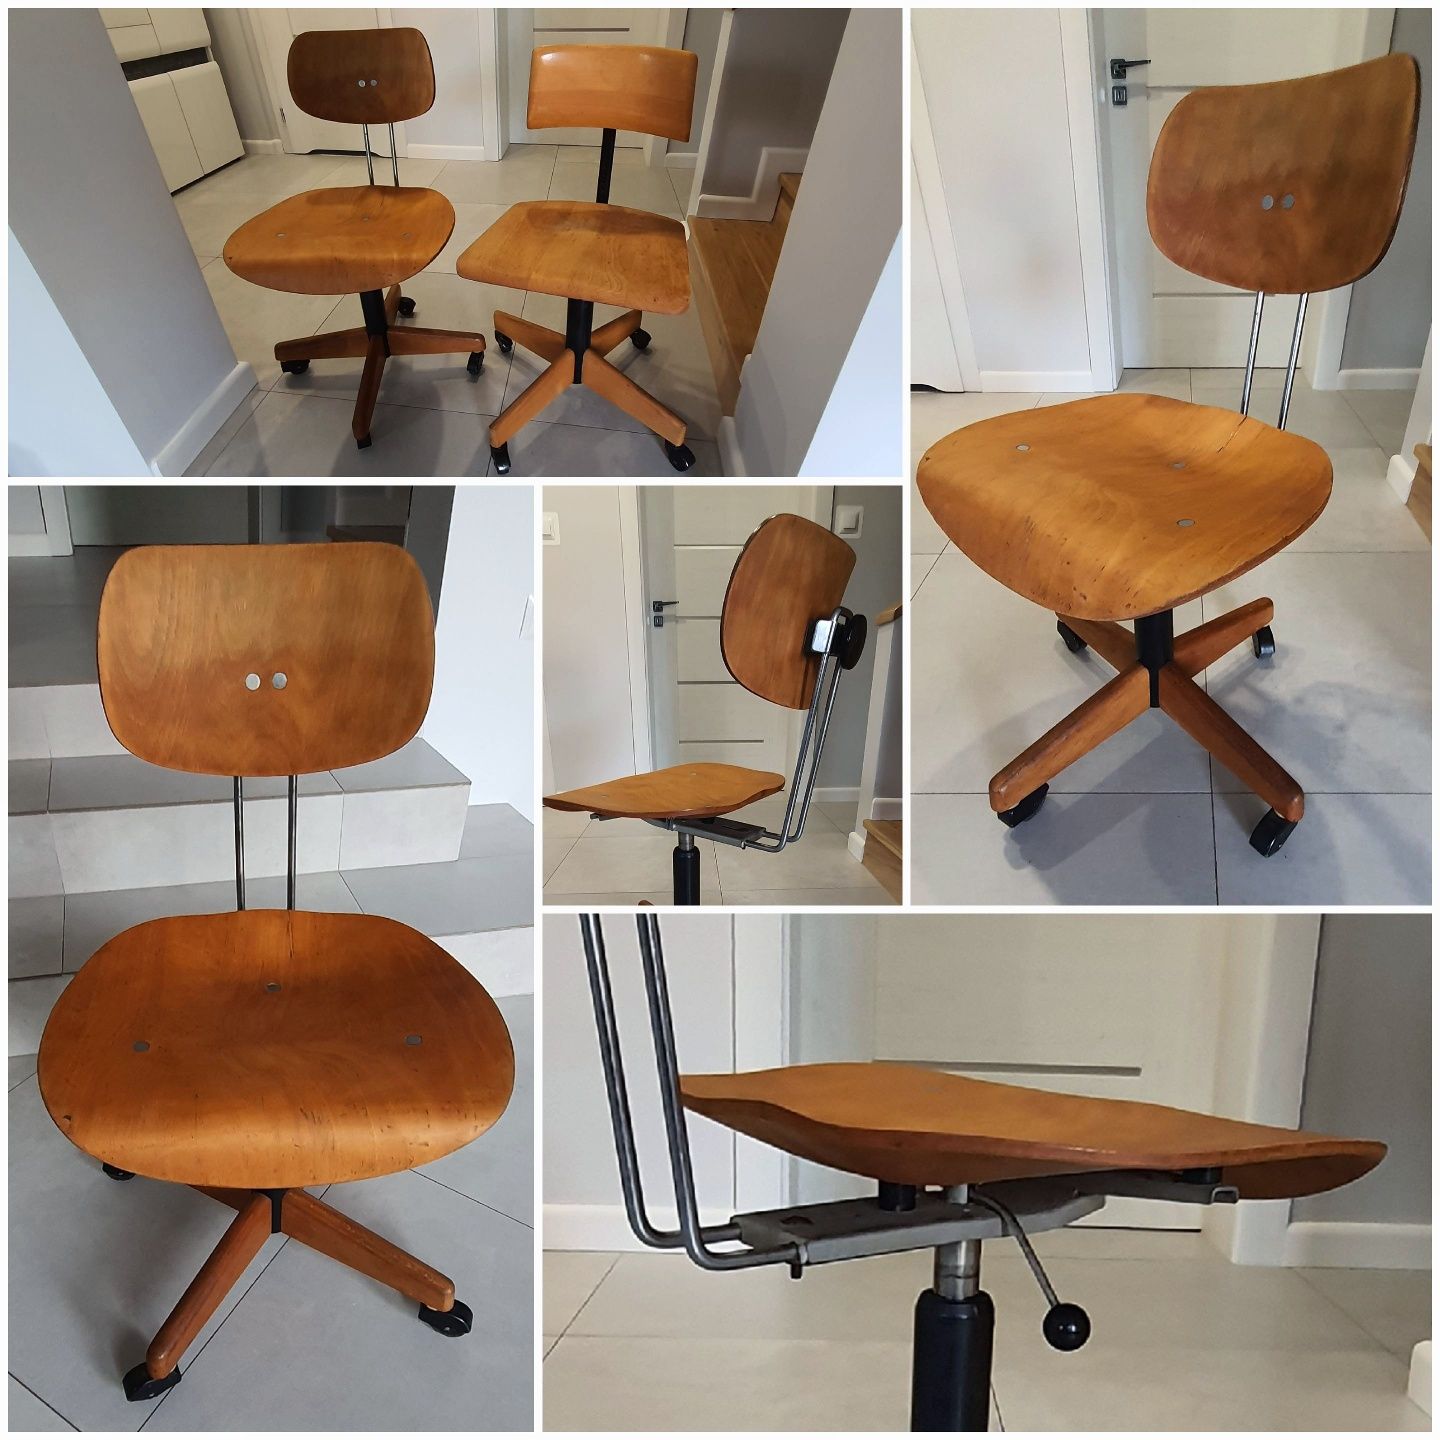 Solidne i stylowe krzesło vintage typu architekt z lat '60/'70.